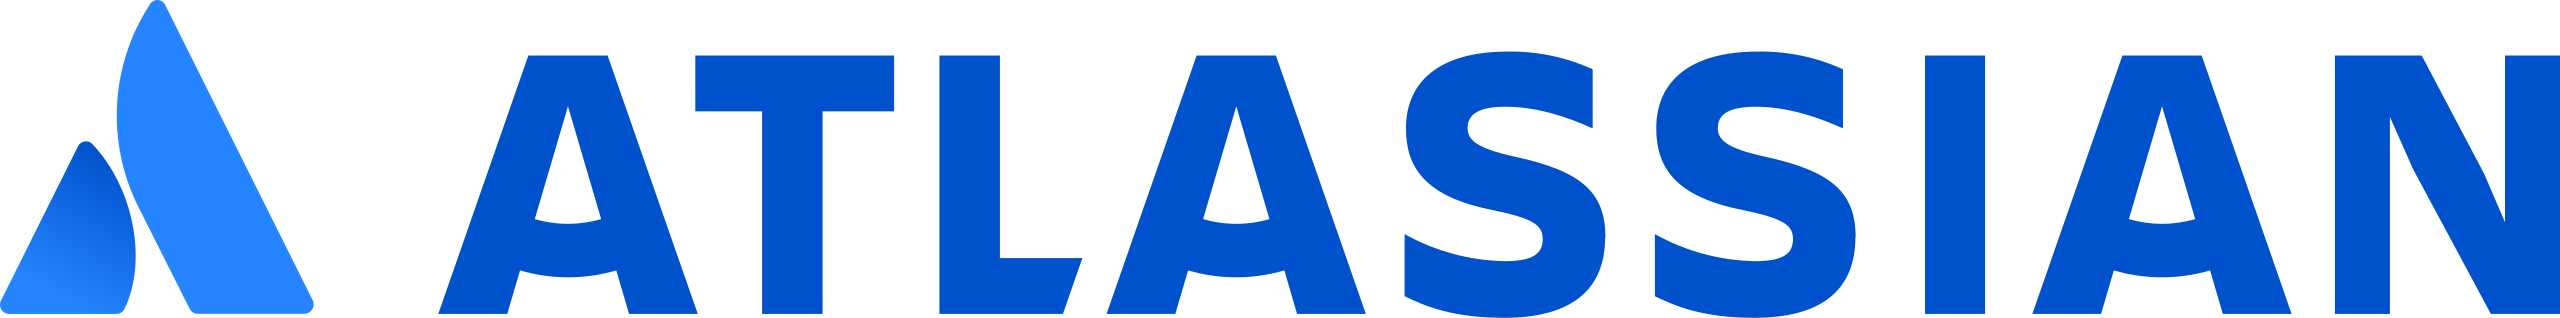 Atlassian, a multinational software corporation.